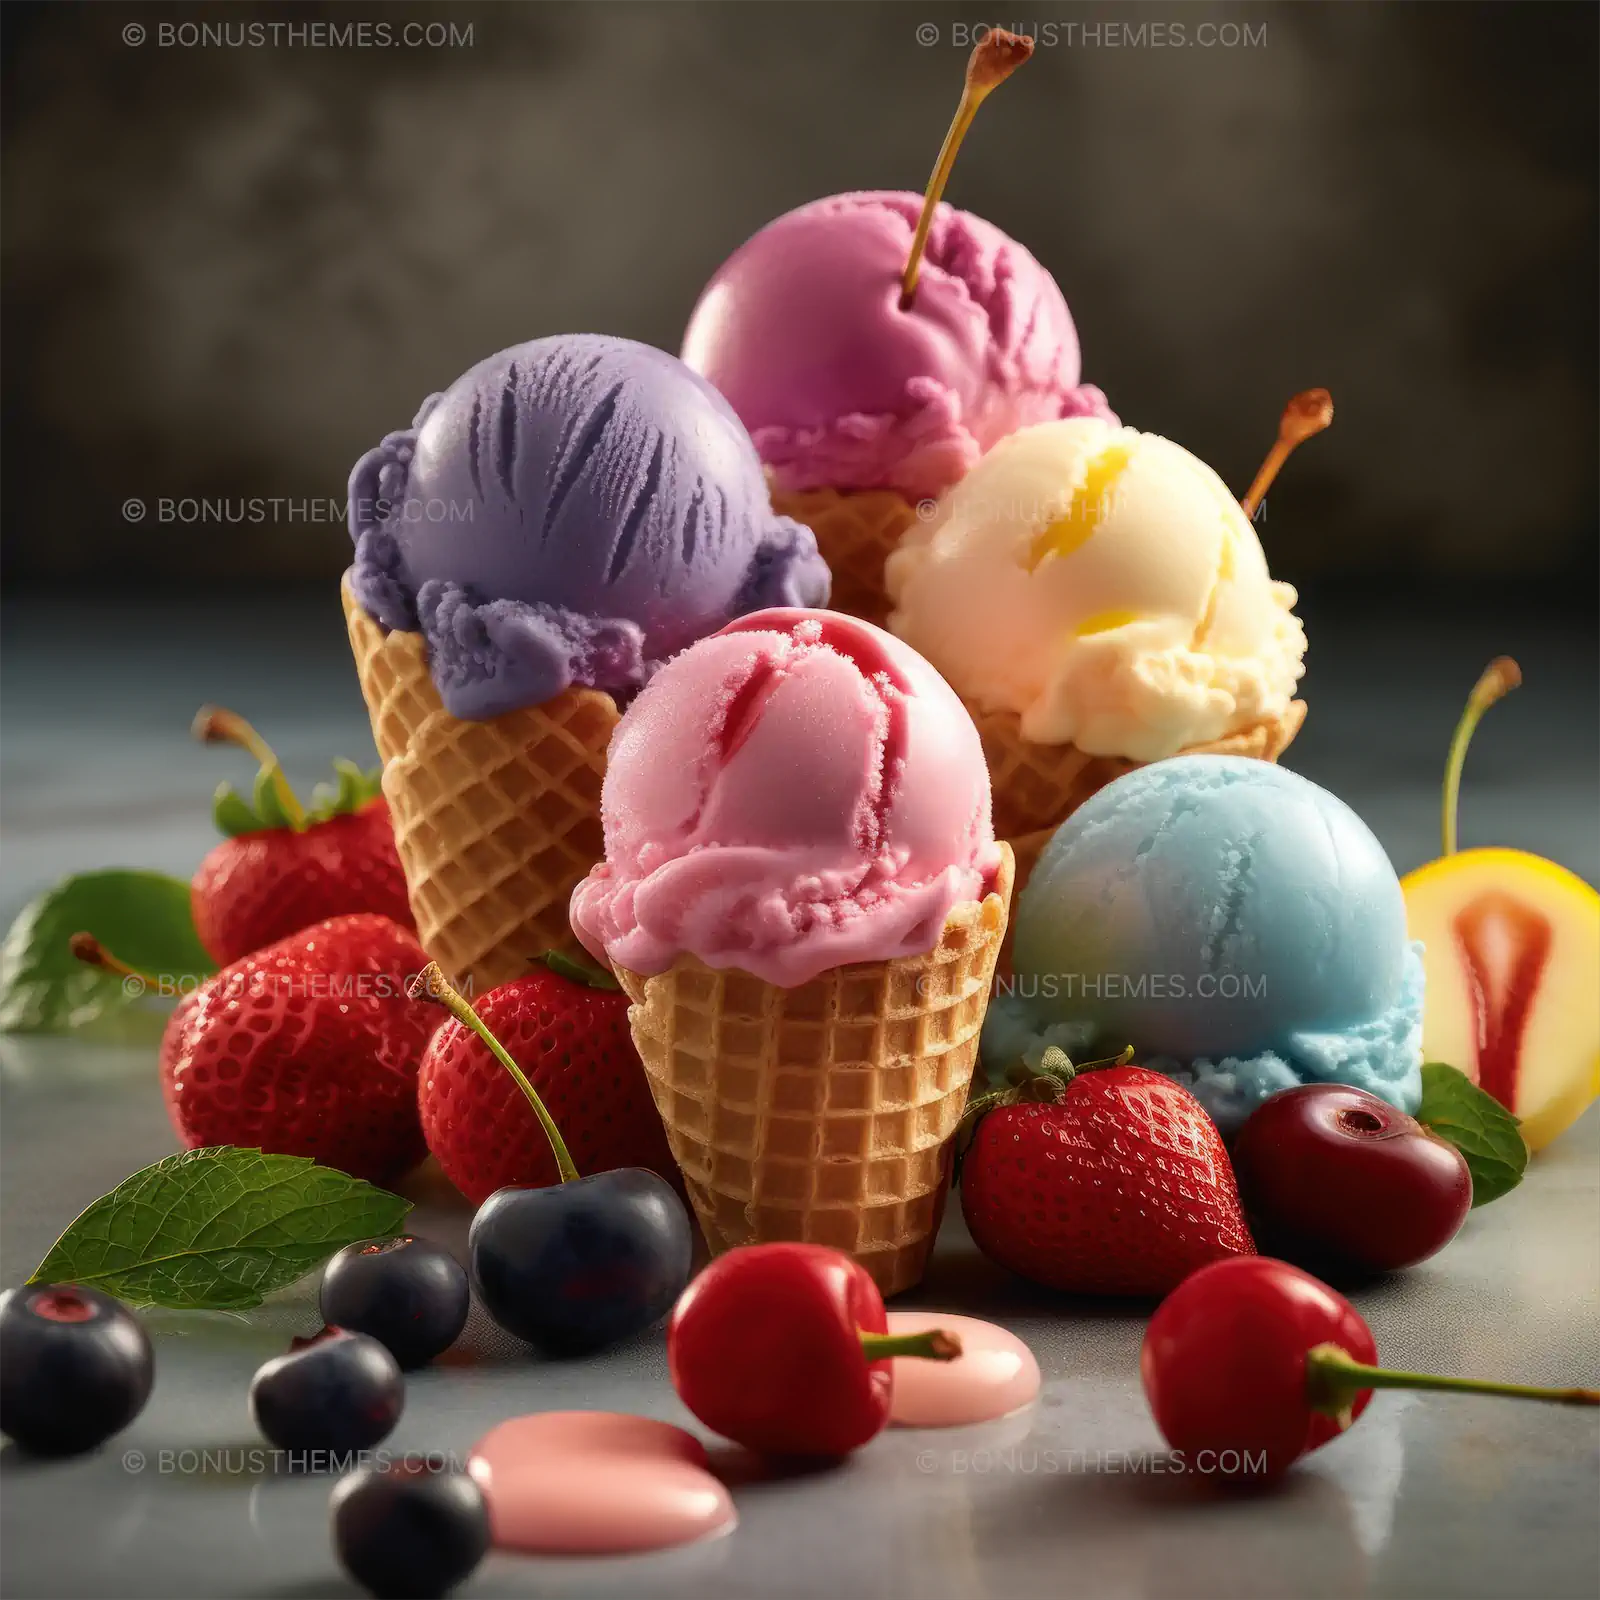 Ice cream cones with fruits